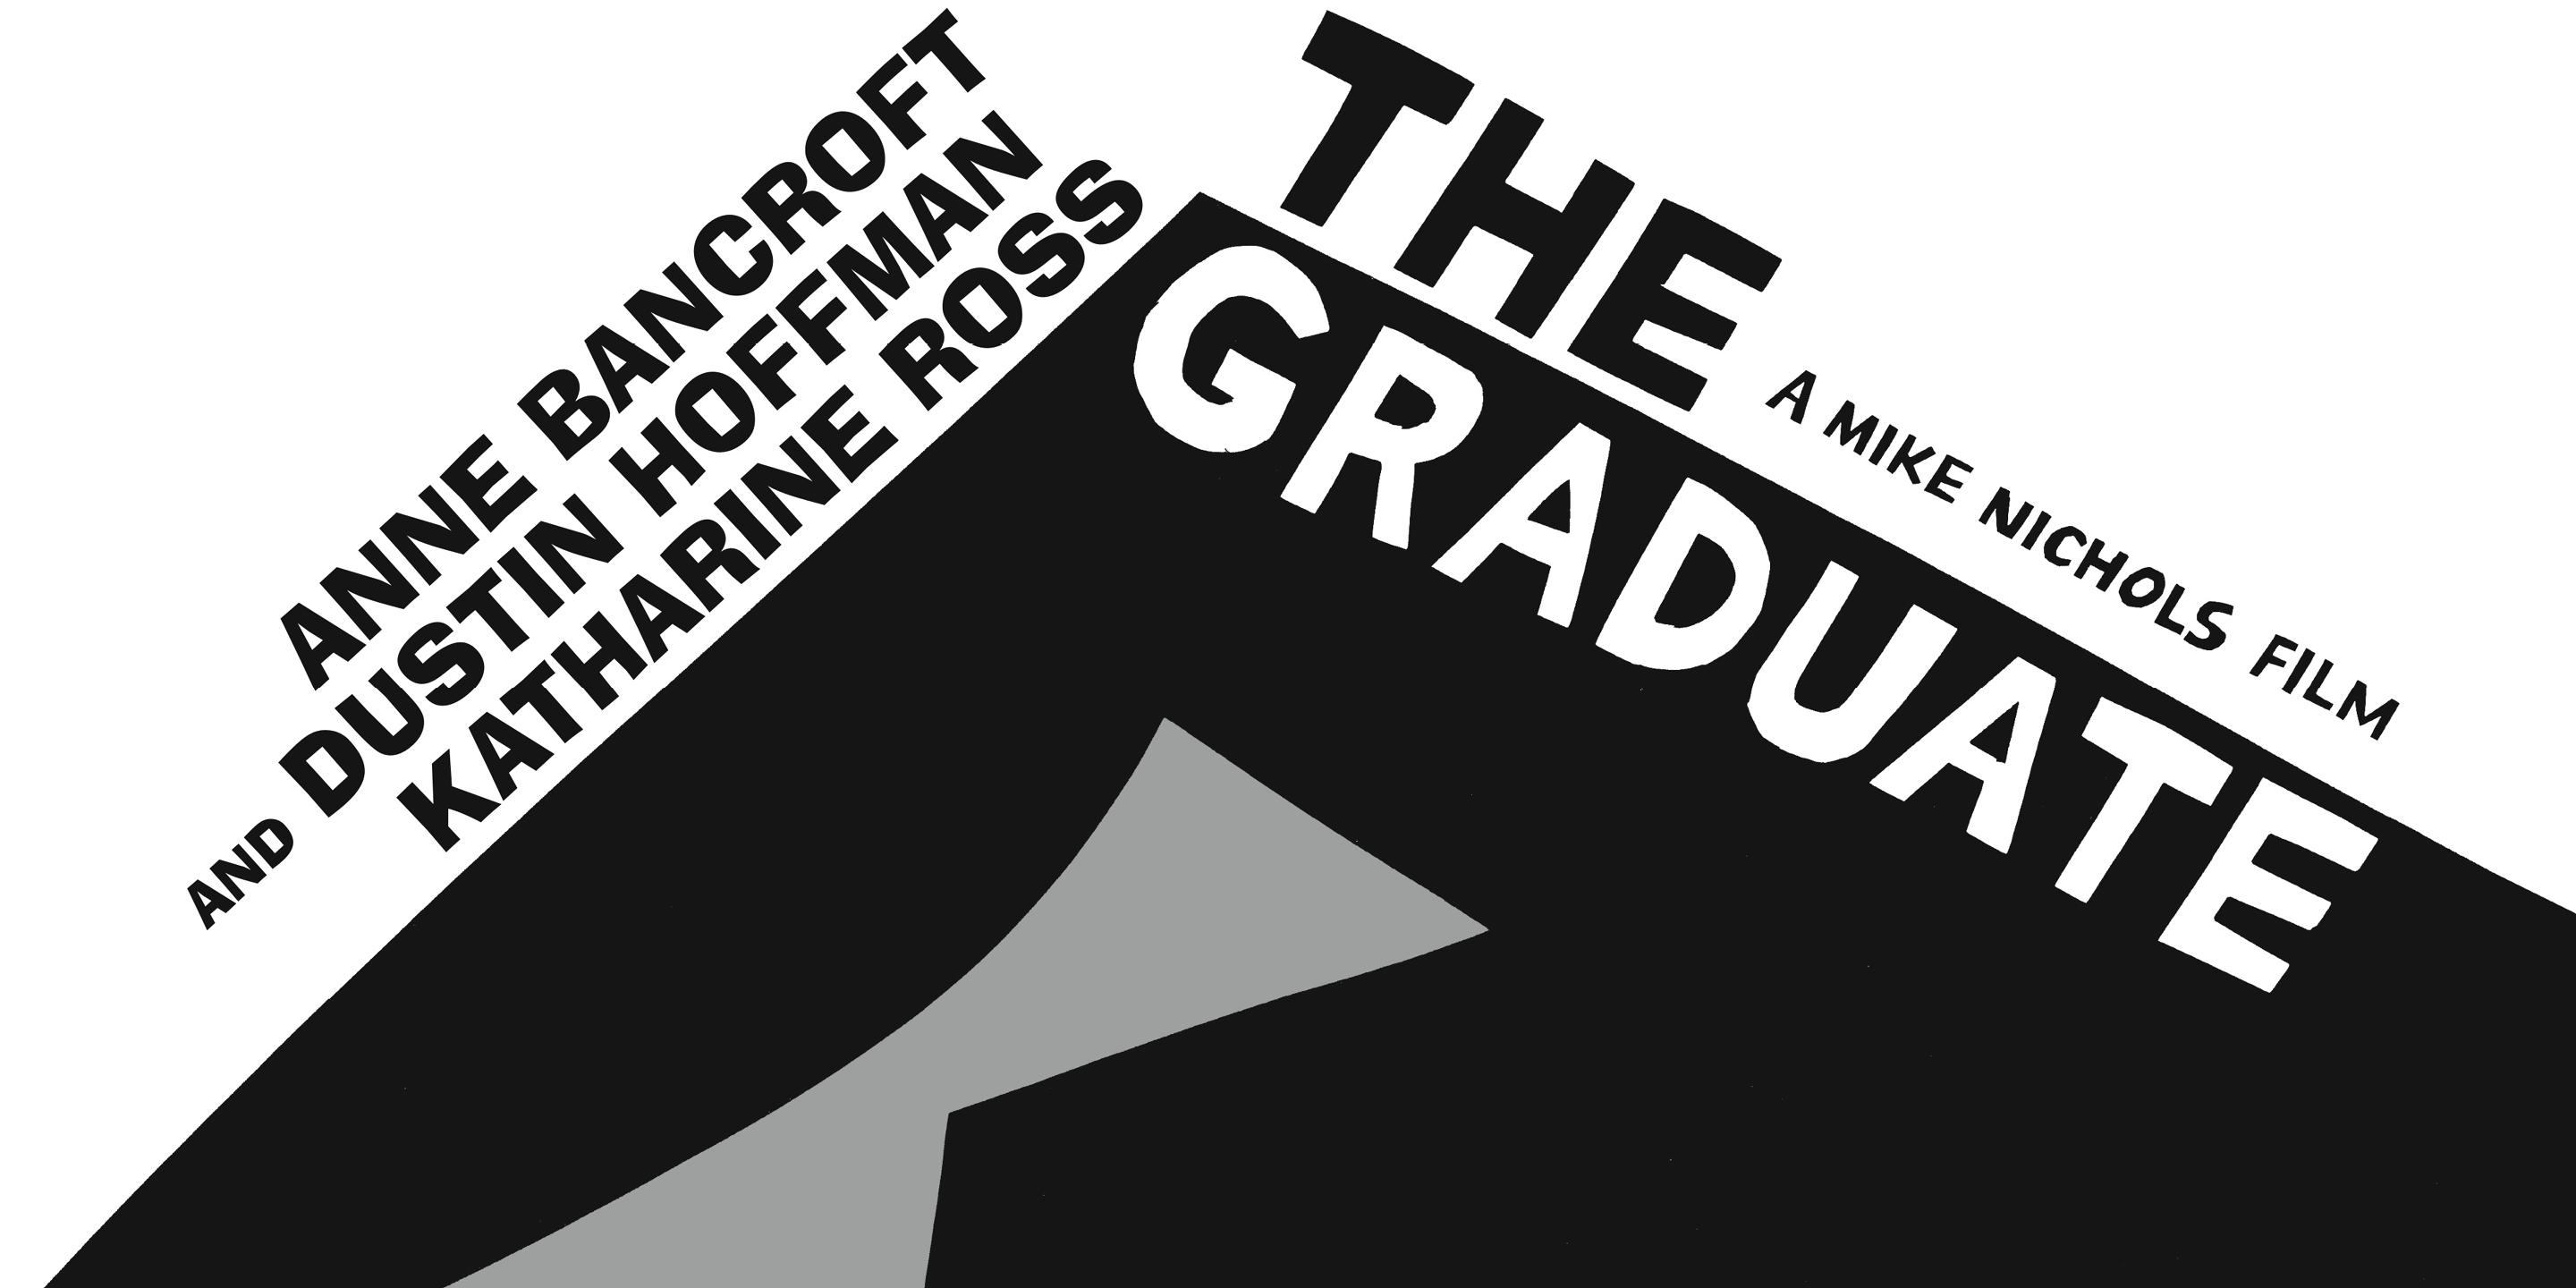 The Graduate [FILM SCREENING]